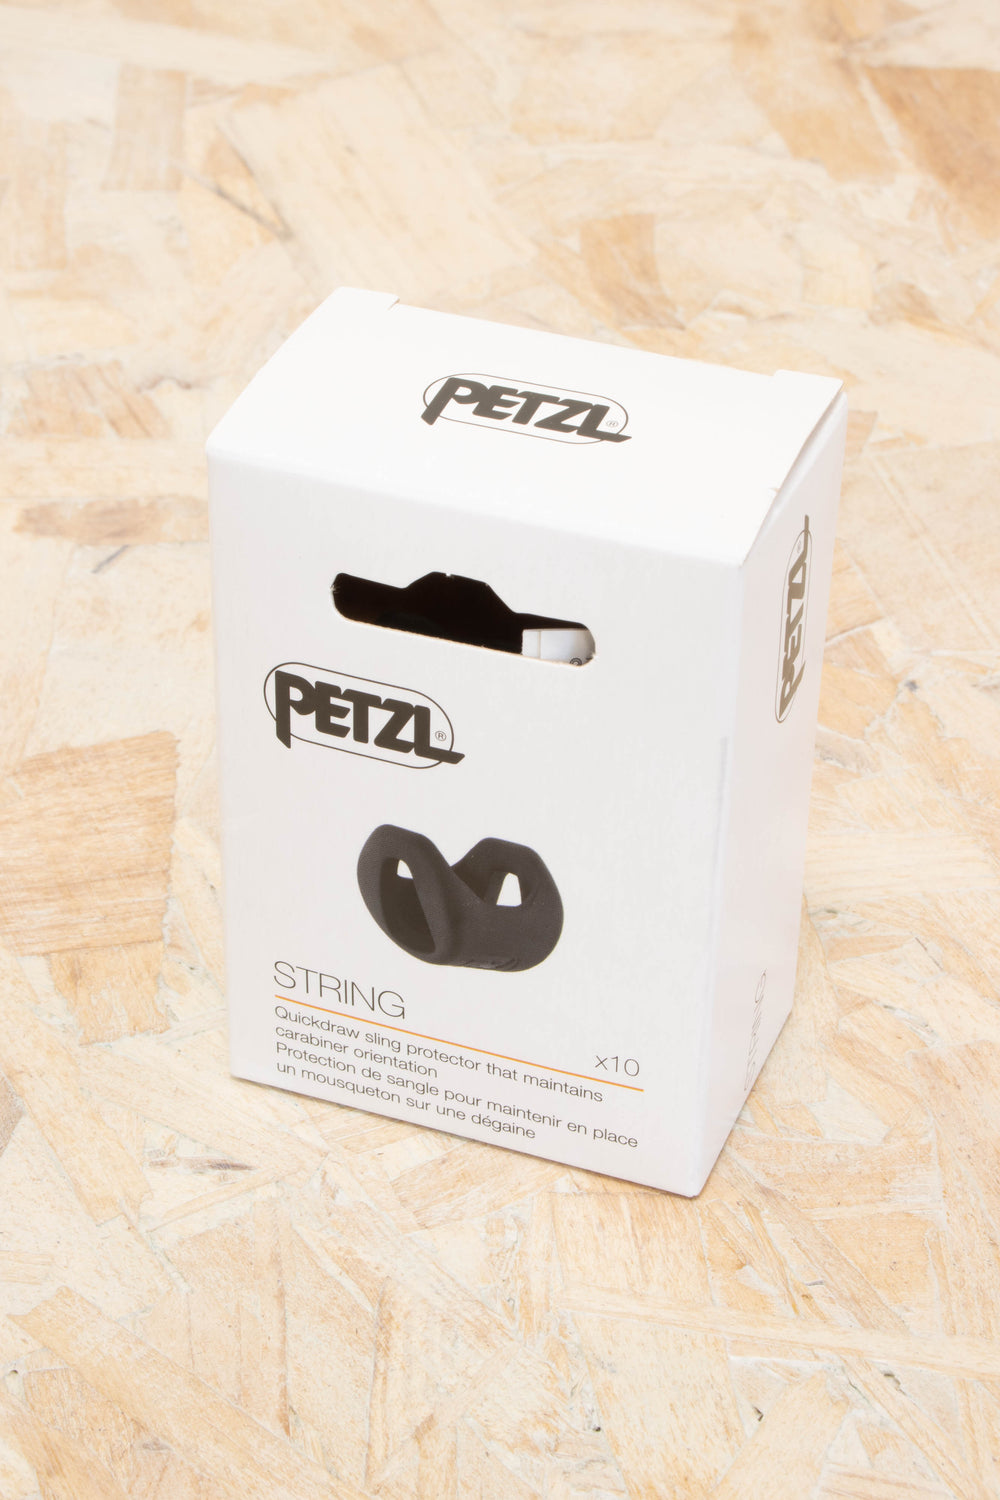 Petzl - String M - 10 Pack